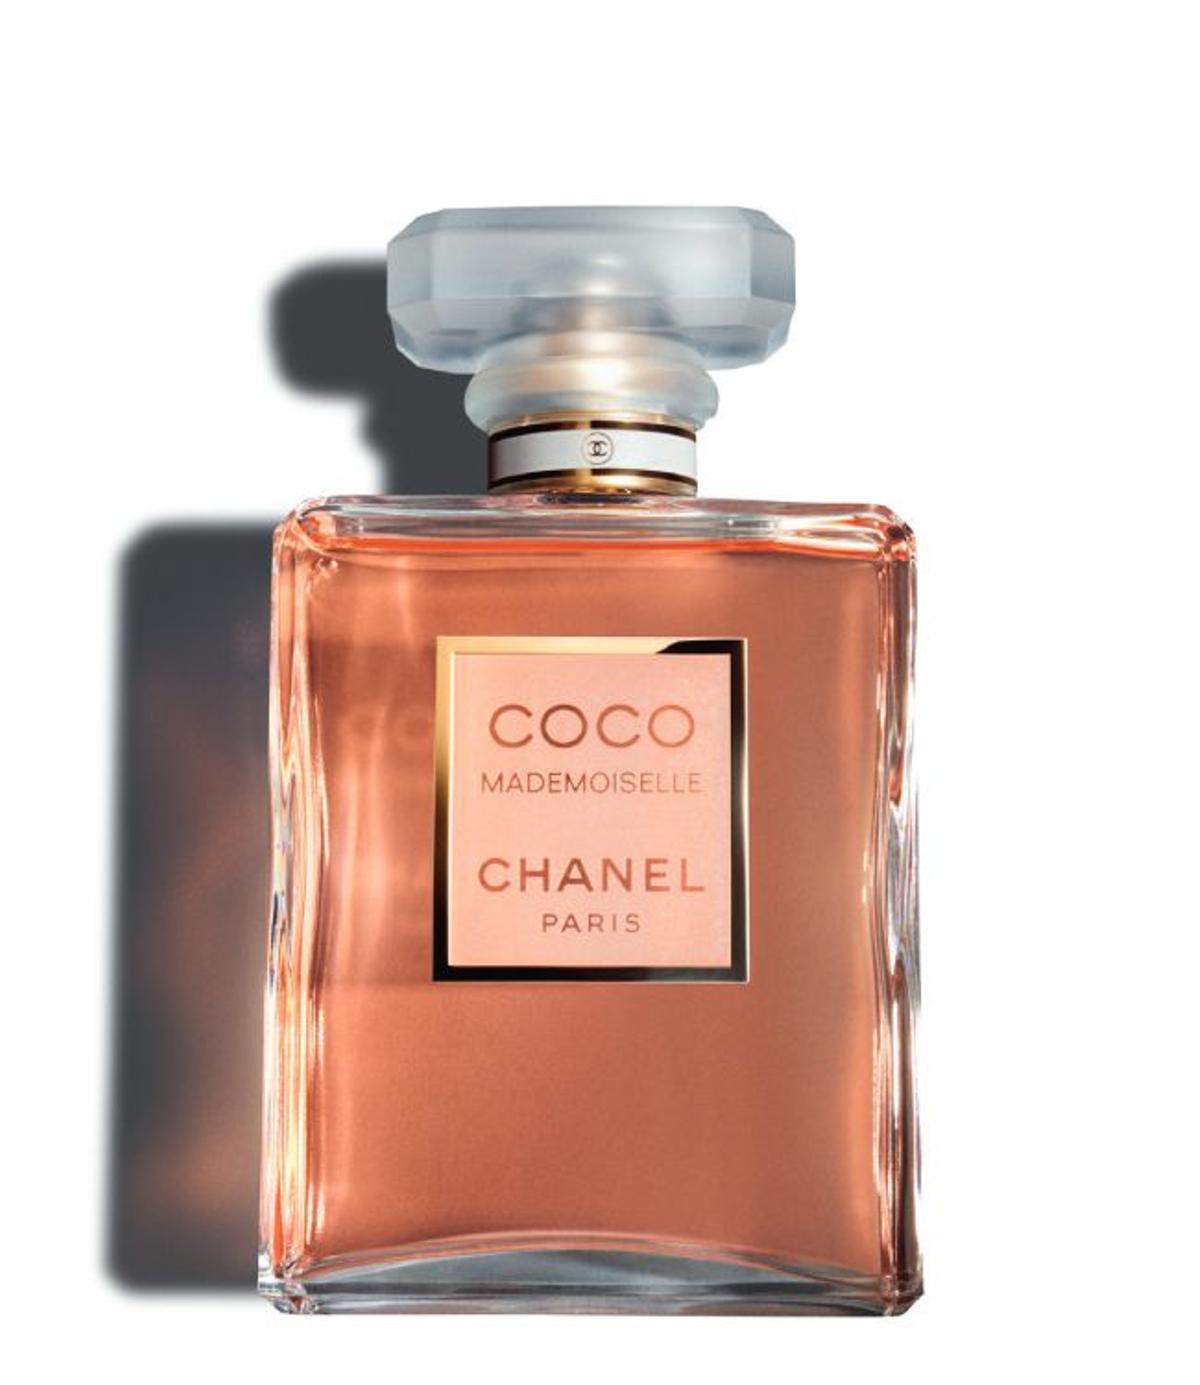 Coco Mademoiselle, de Chanel